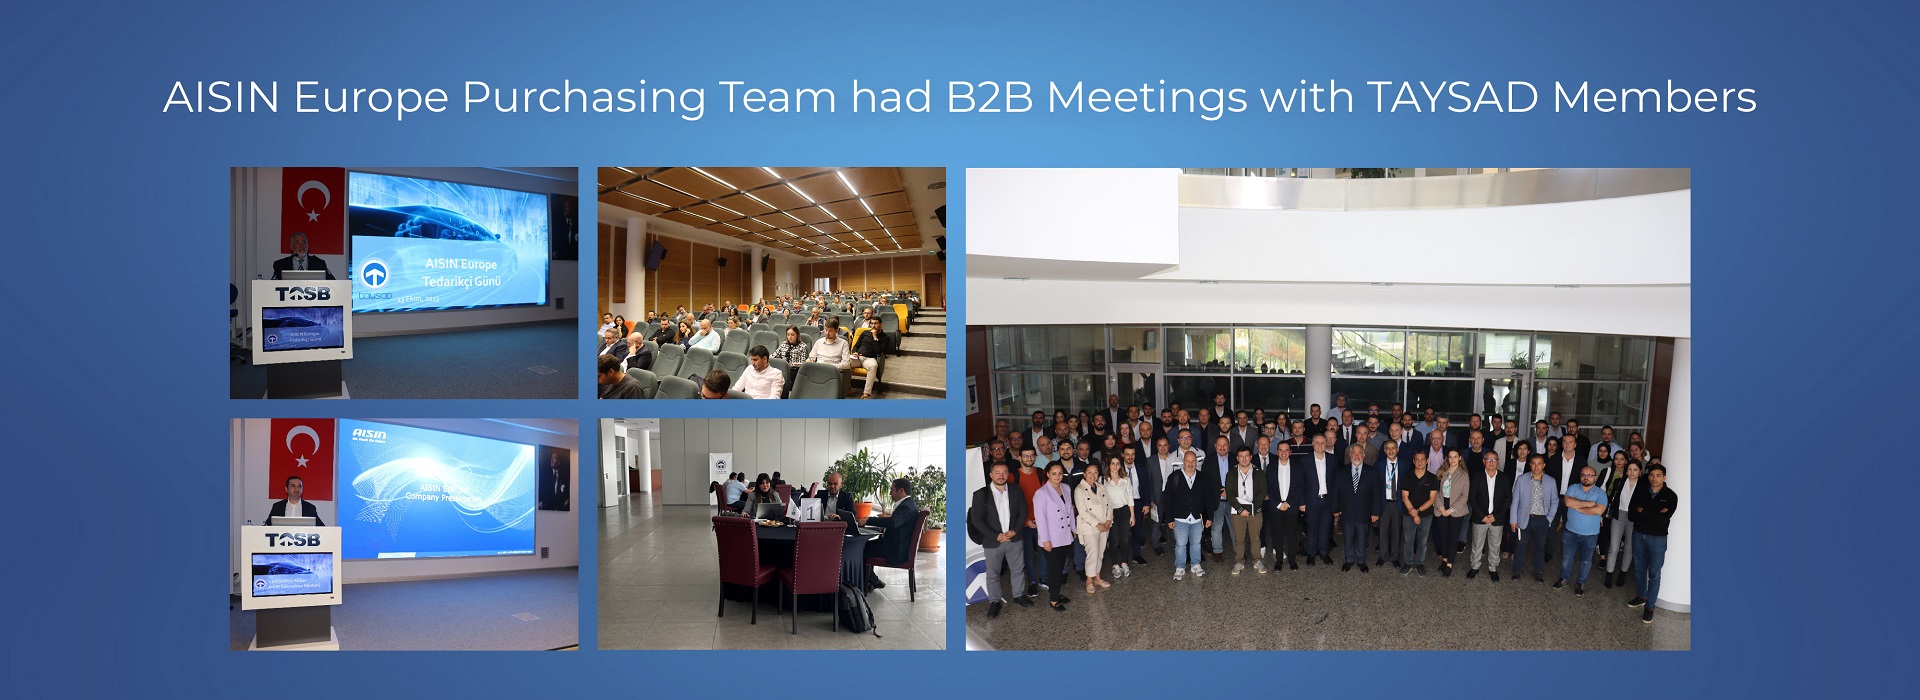 AISIN Europe Purchasing Team had B2B Meetings with TAYSAD Members